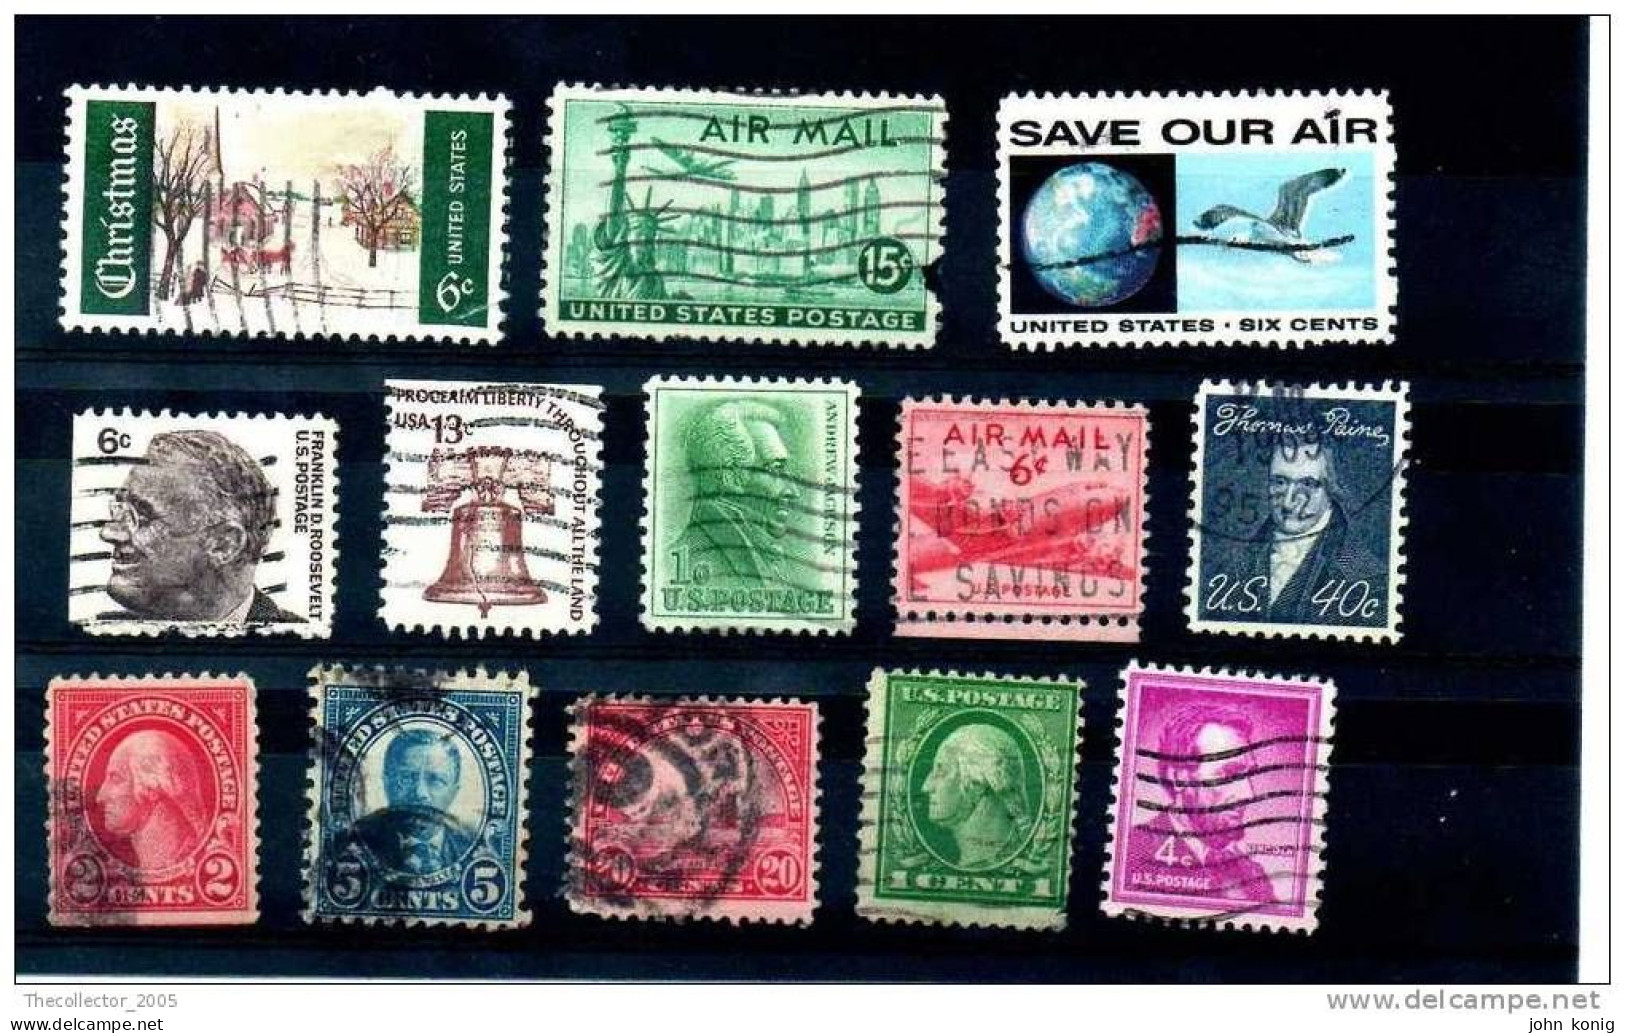 STATI UNITI D'AMERICA - U.S.A. - Lotto Francobolli Usati Classici - Lot Of Classic Used Stamps - Collections